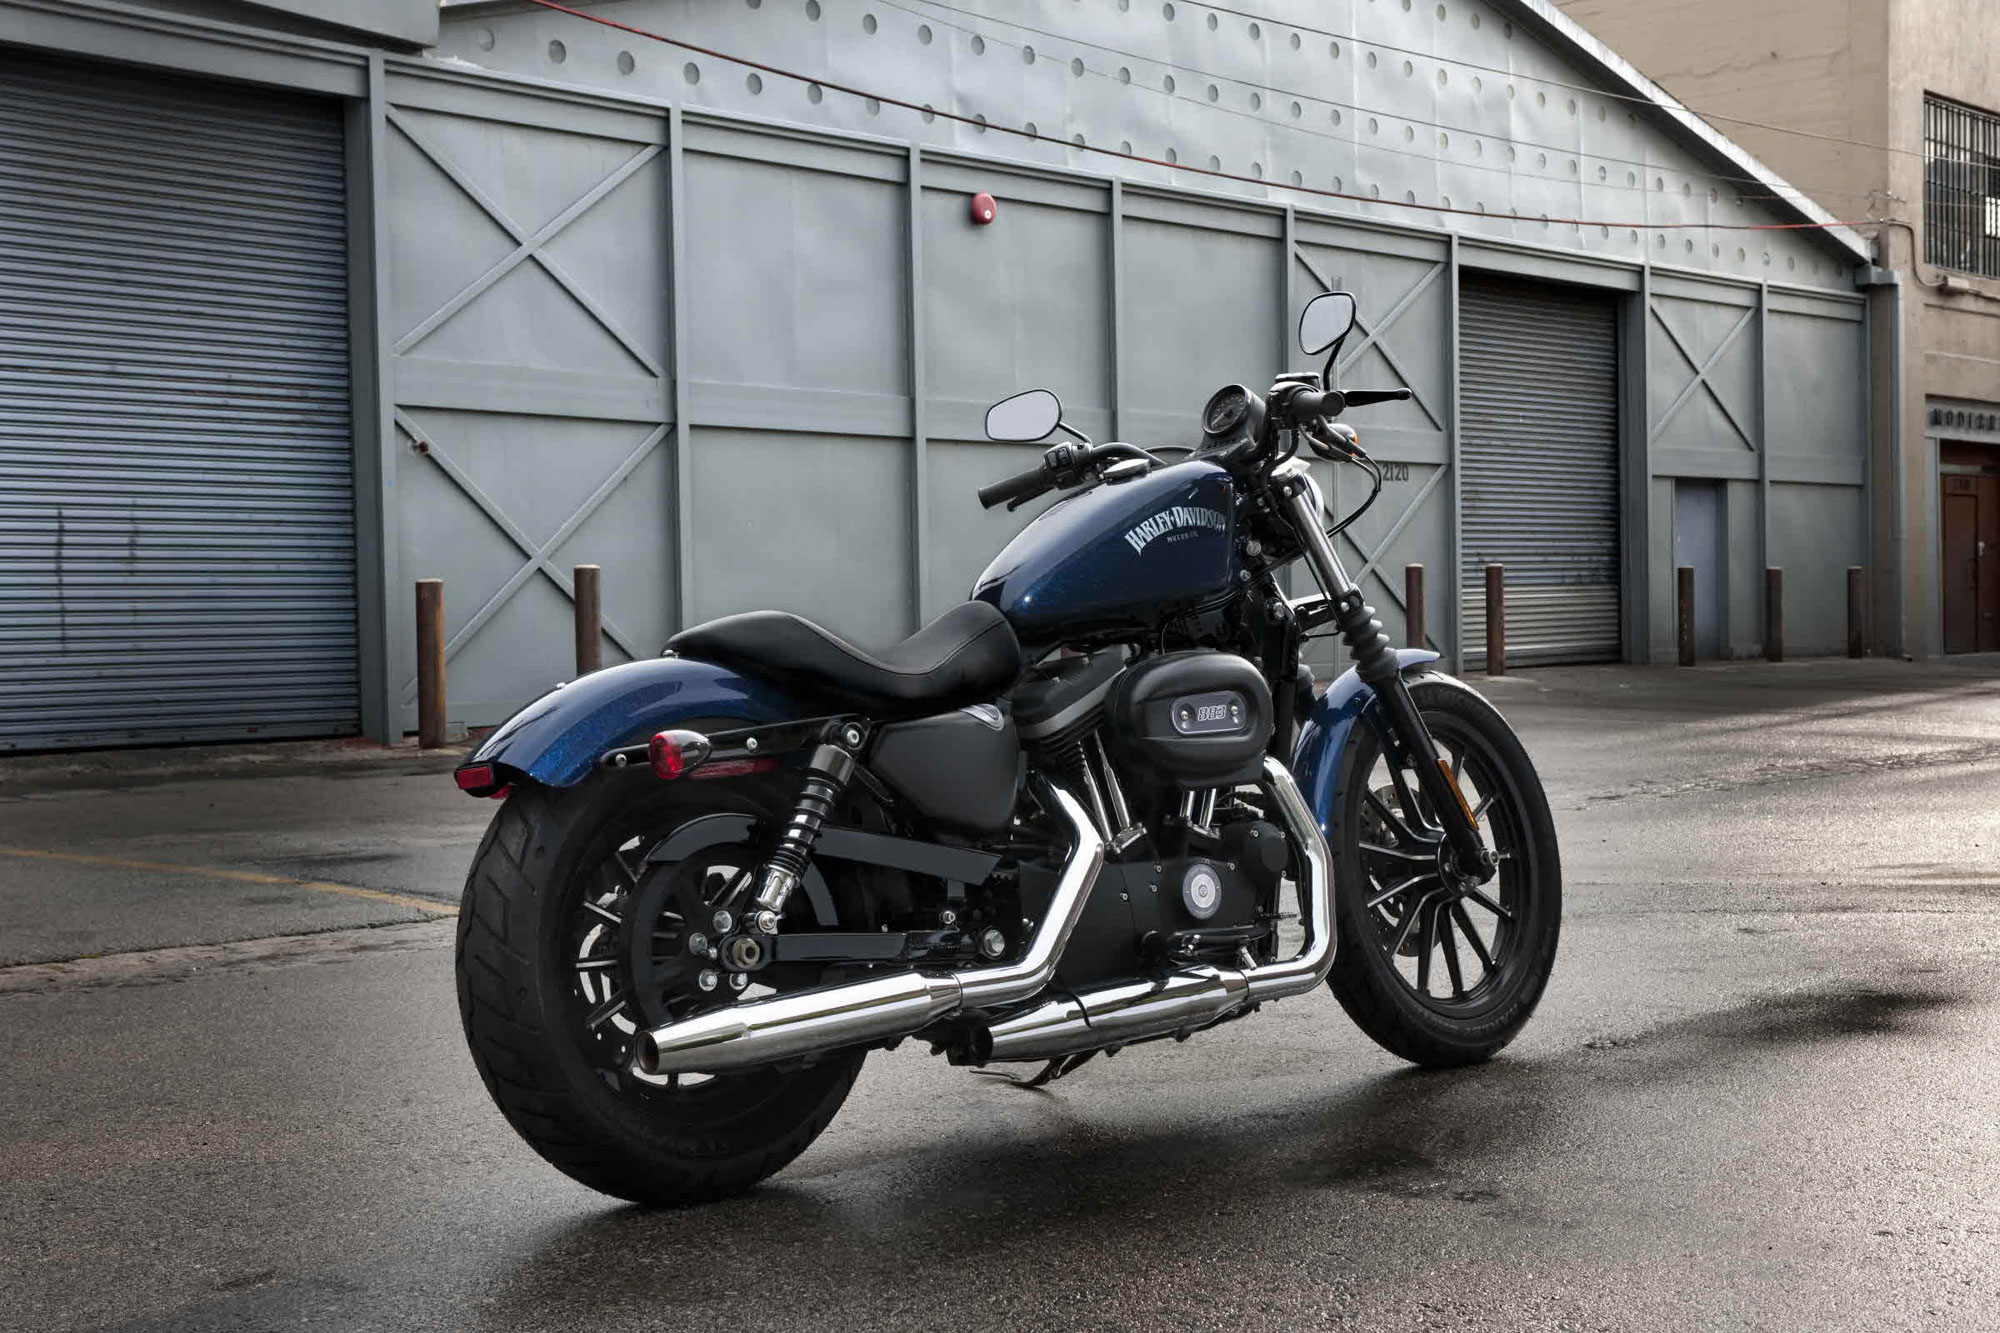 2012 Harley Davidson Xl883n Iron 883 Review